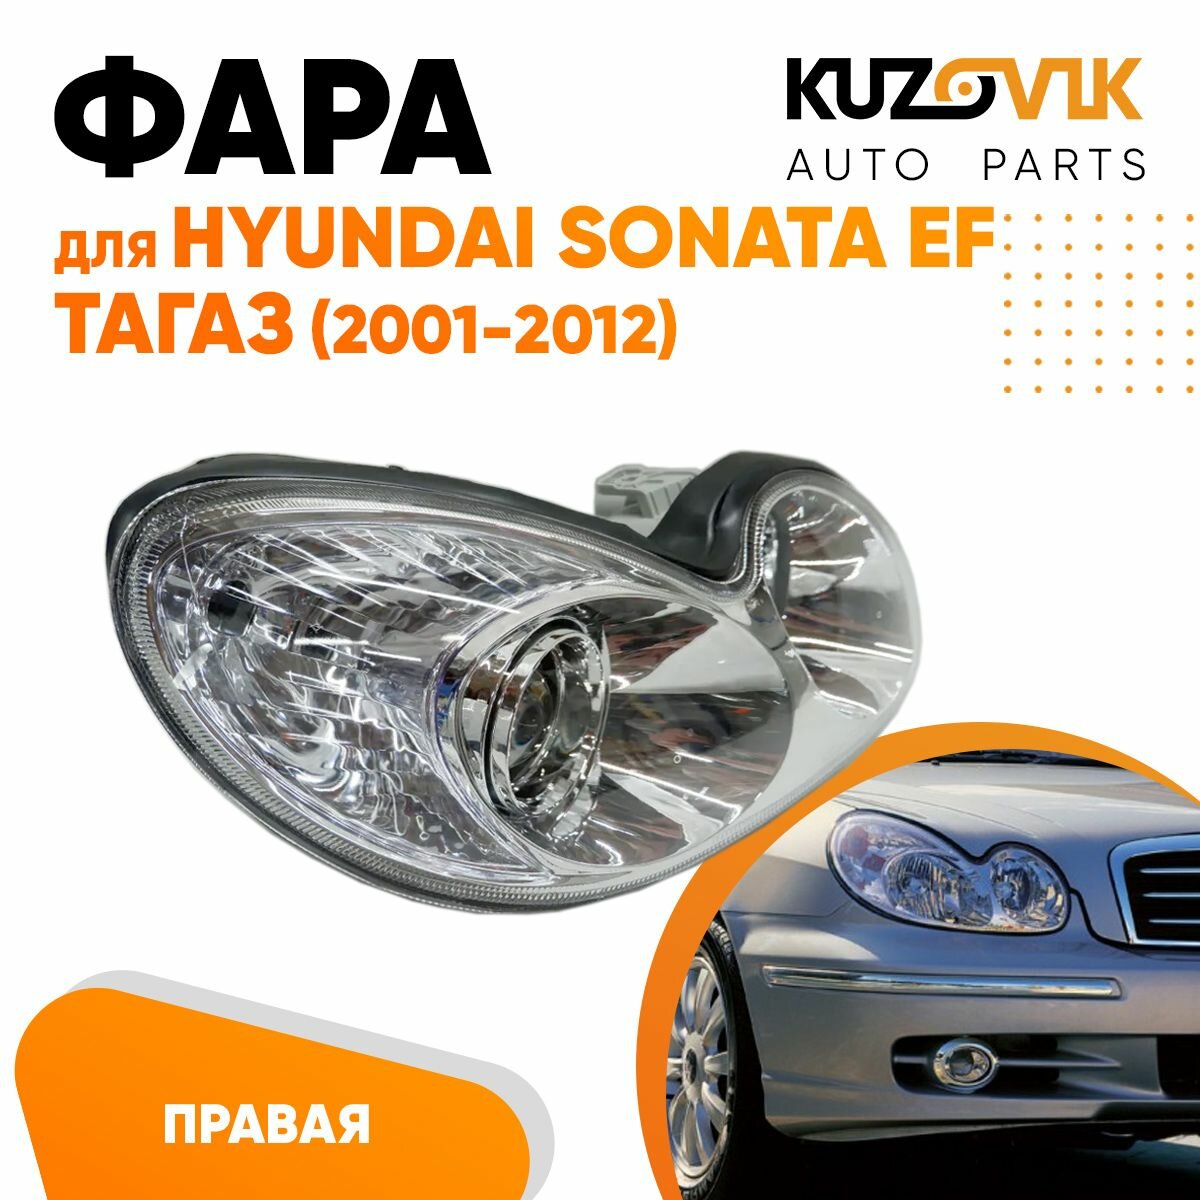 Фара правая Hyundai Sonata EF Хендай Соната ЕФ Тагаз (2001-2012) под электрокорректор